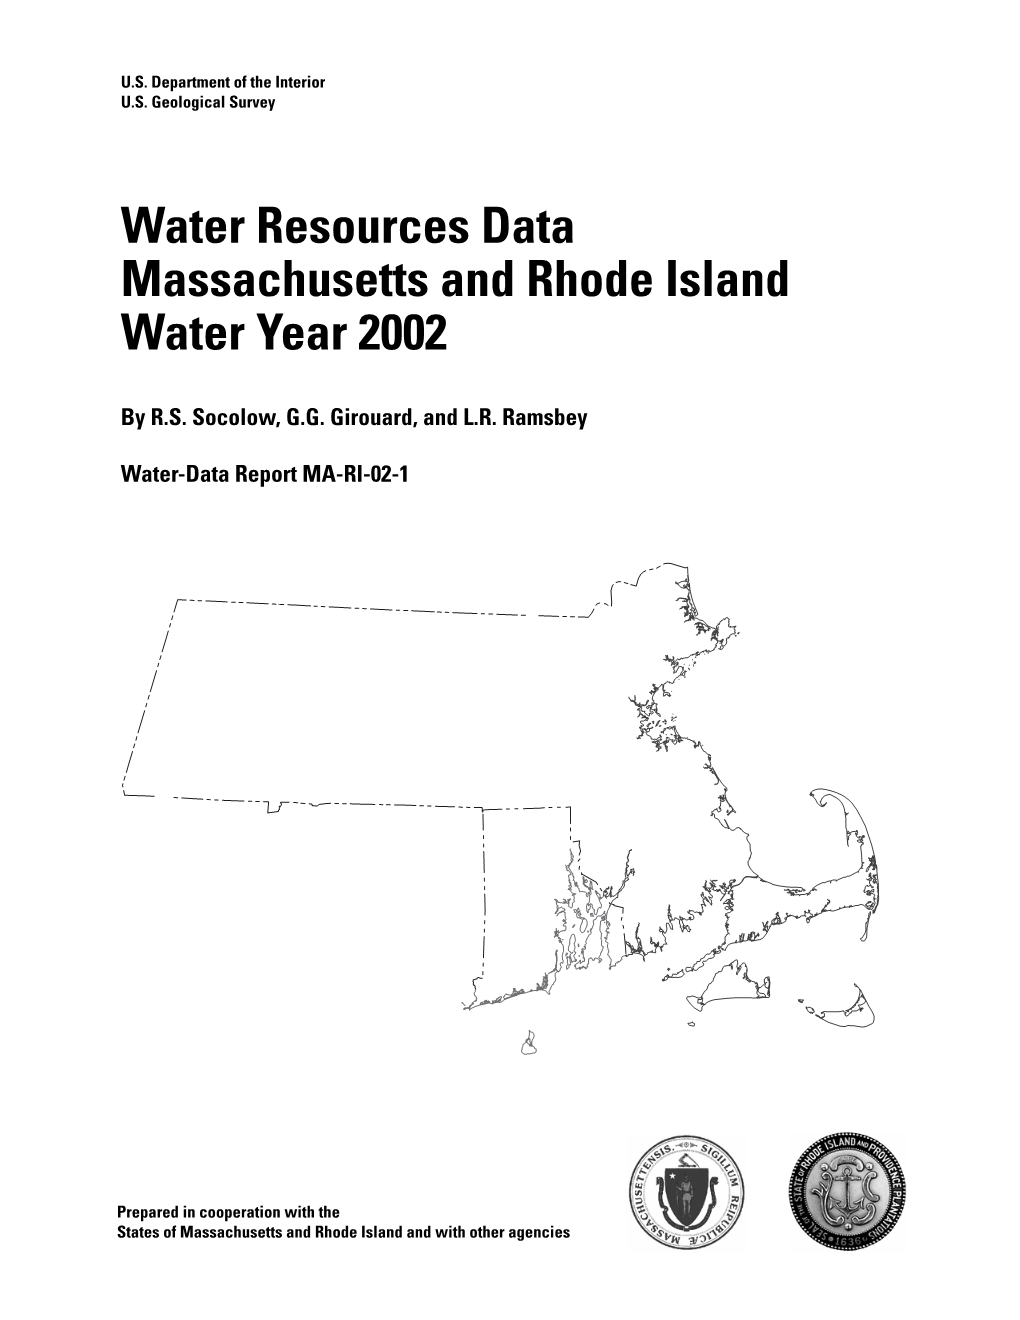 Water Resources Data Massachusetts and Rhode Island Water Year 2002